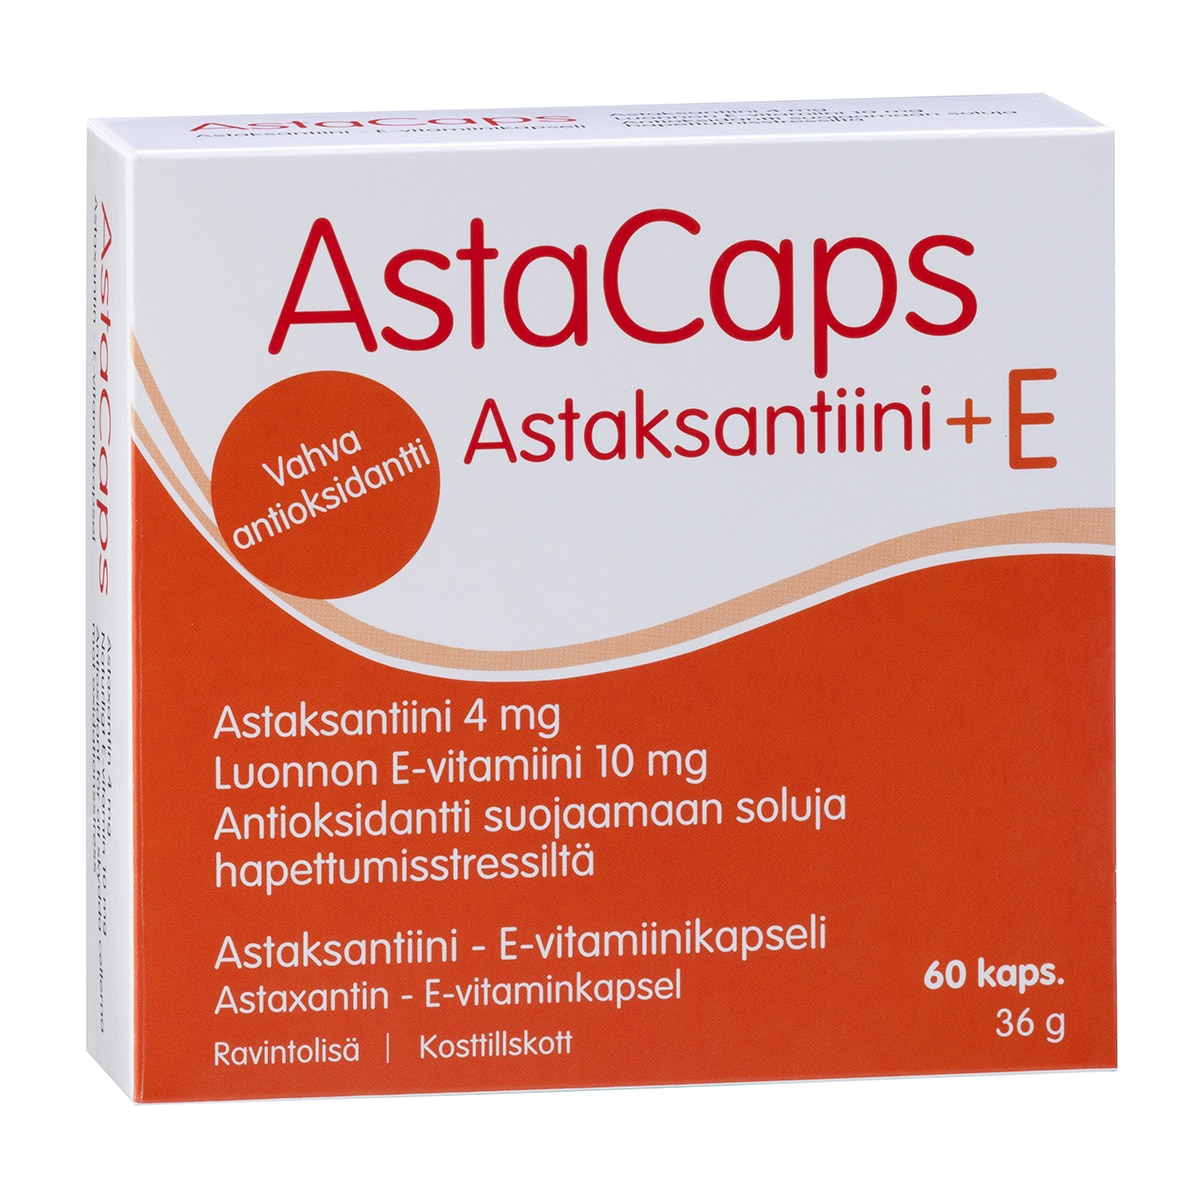 AstaCaps 60 cap